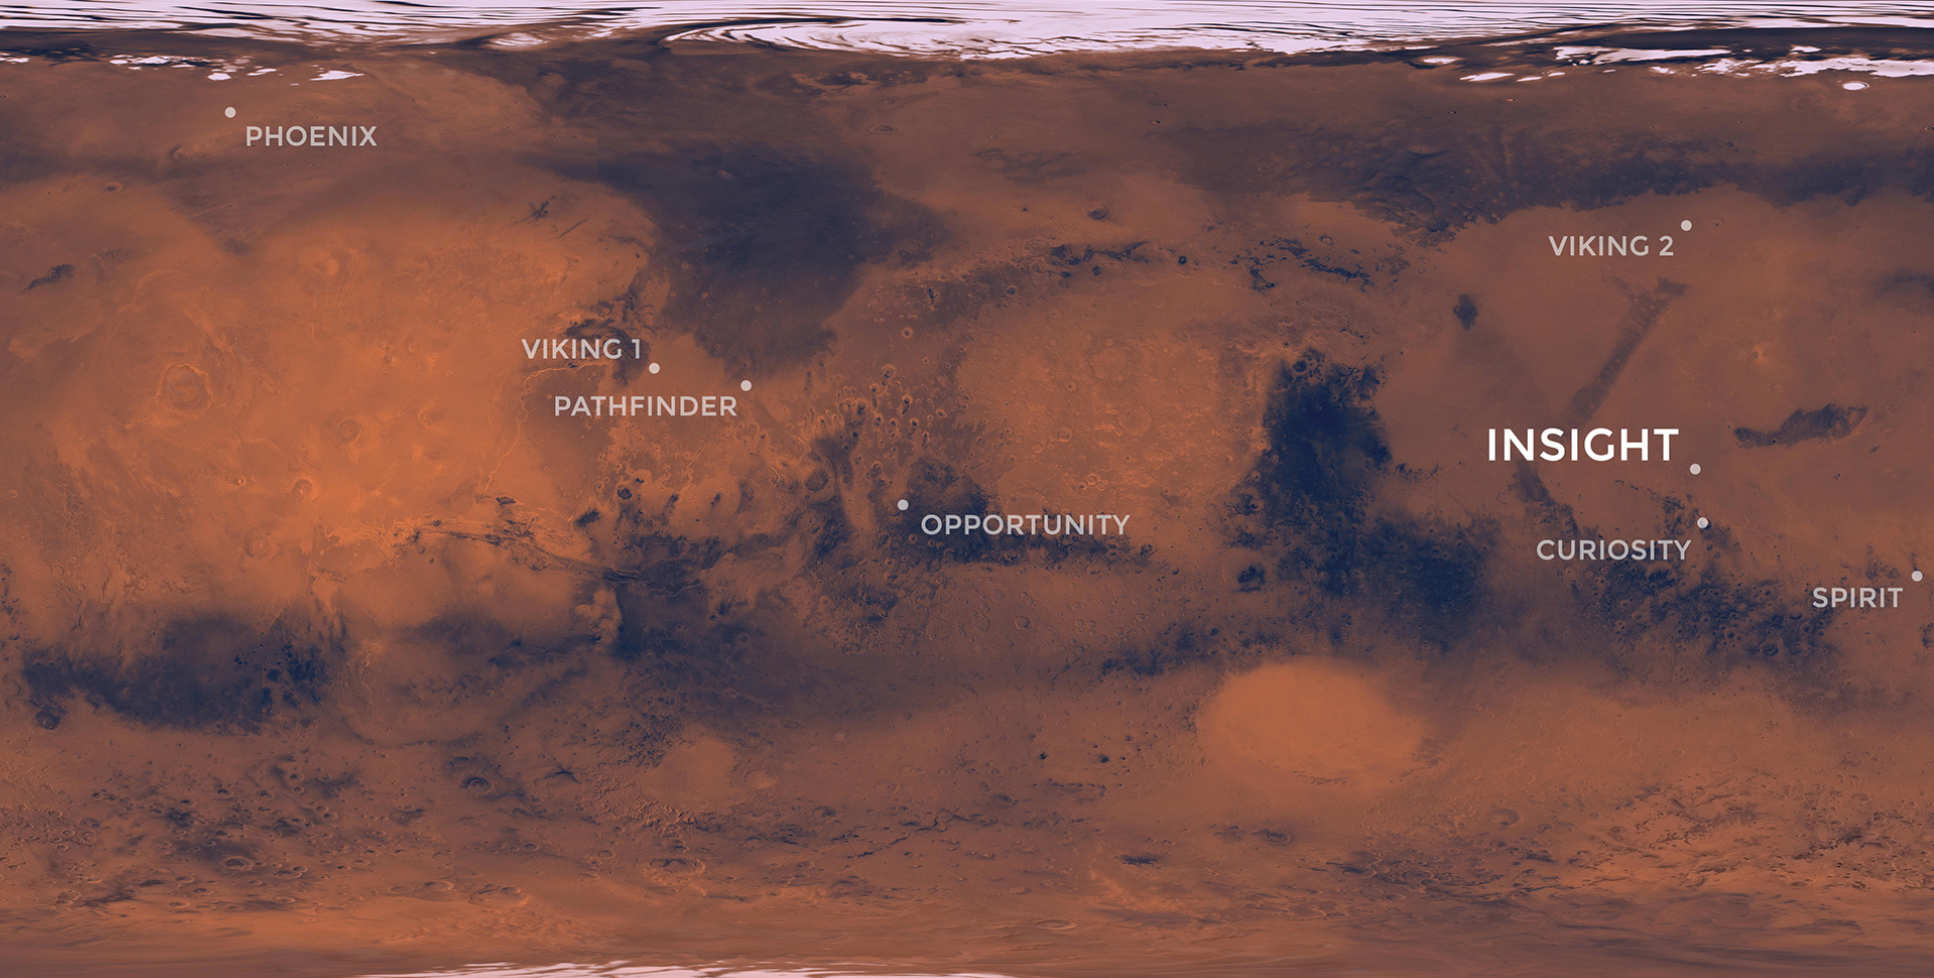 A map of Elysium Planitia, Mars.